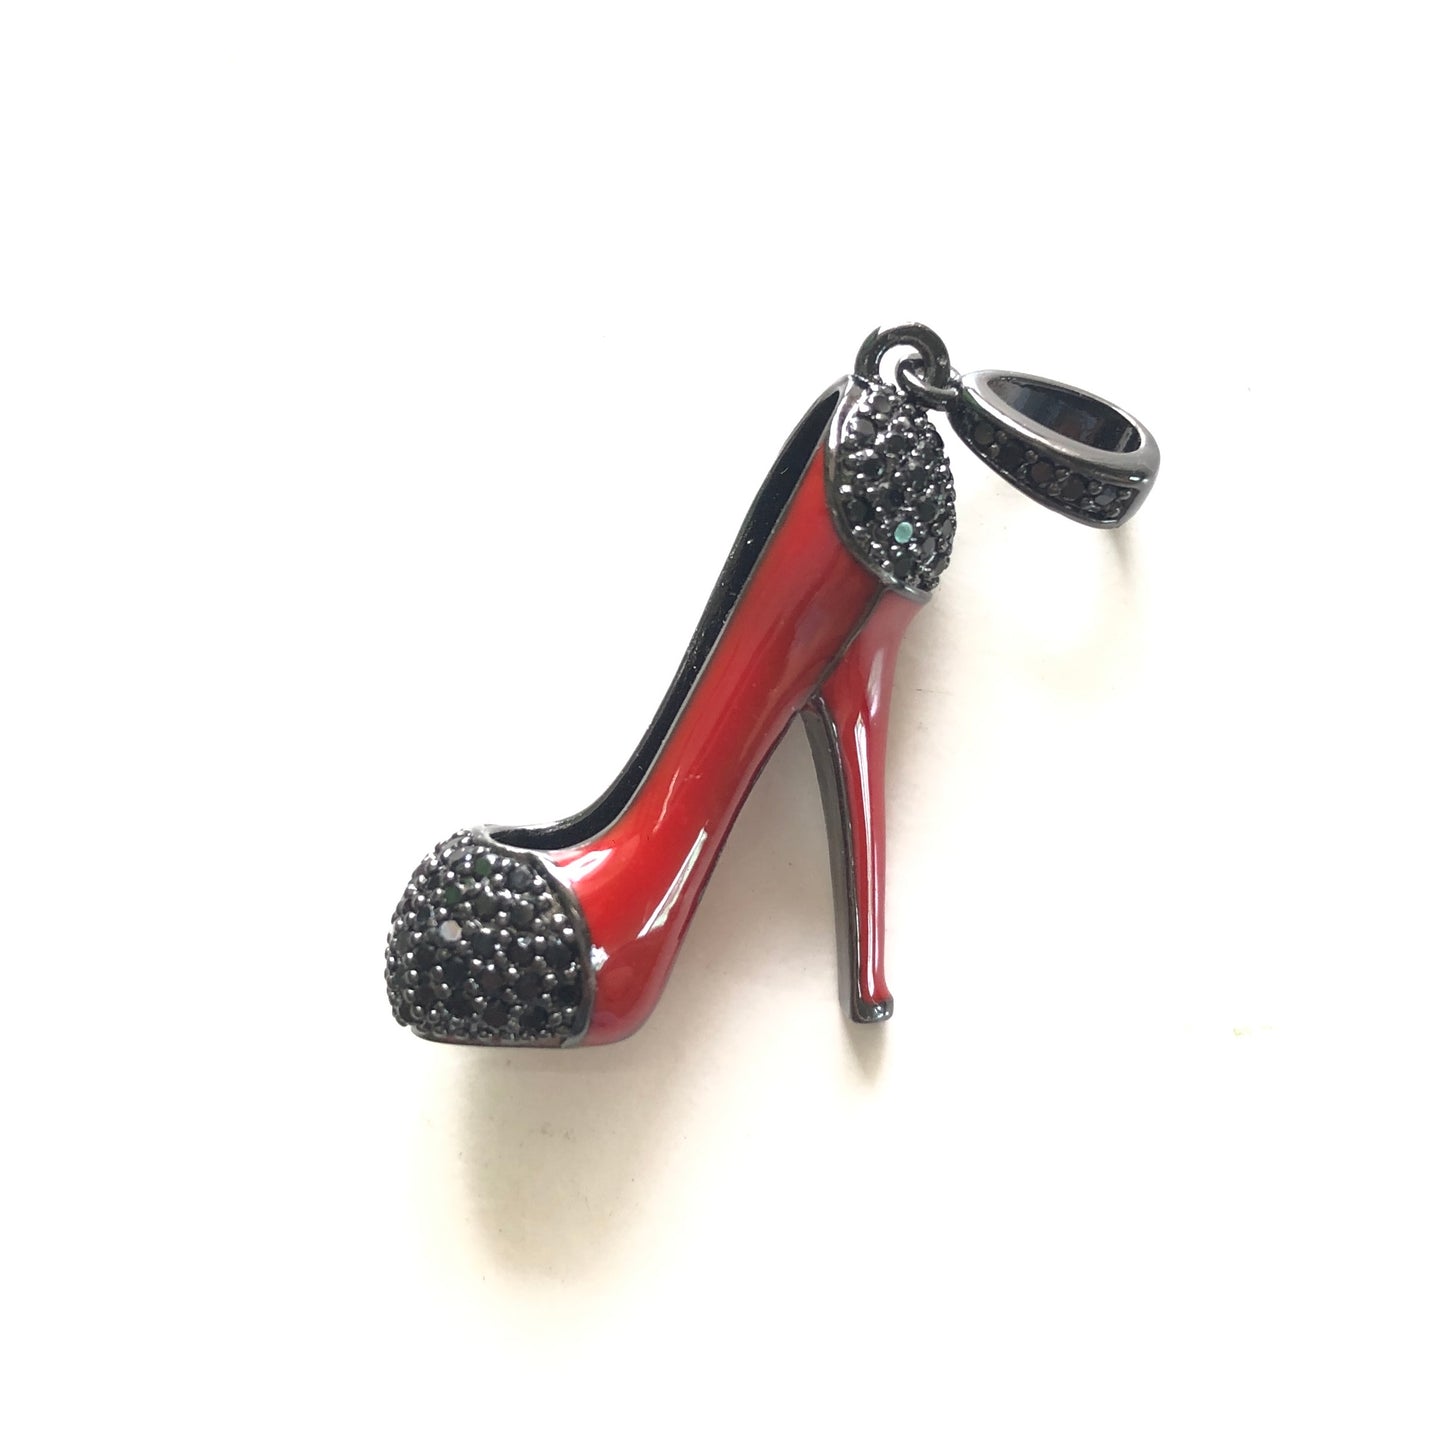 10pcs/lot 30*26mm CZ Paved Red High Heel Shoe Charms Black on Black CZ Paved Charms High Heels On Sale Charms Beads Beyond